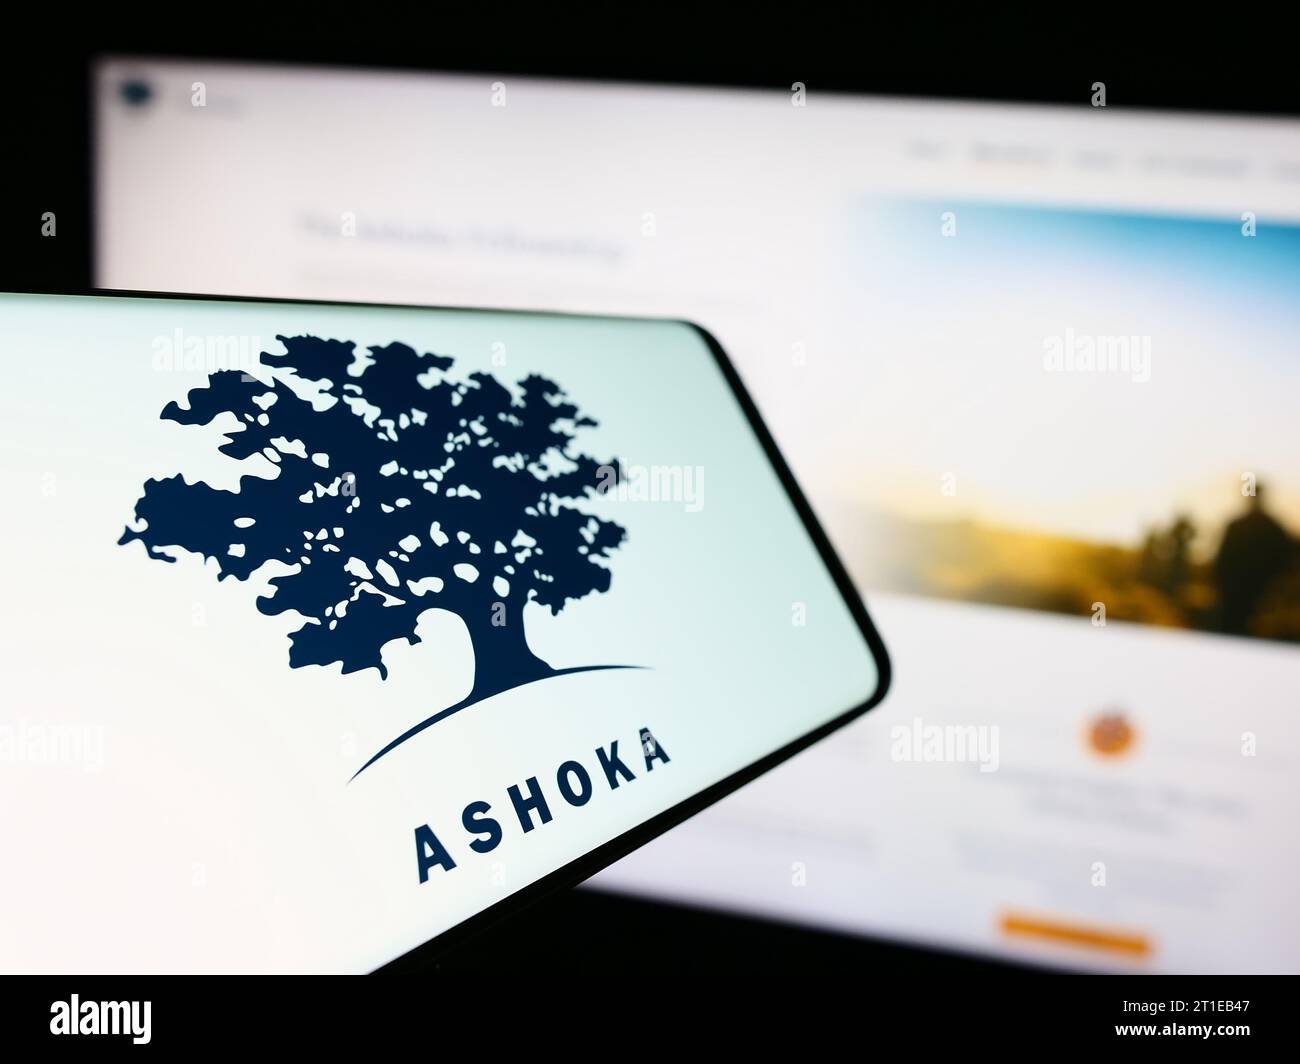 Smartphone with logo of social entrepreneurship organization Ashoka in front of website. Focus on center-left of phone display. Stock Photo